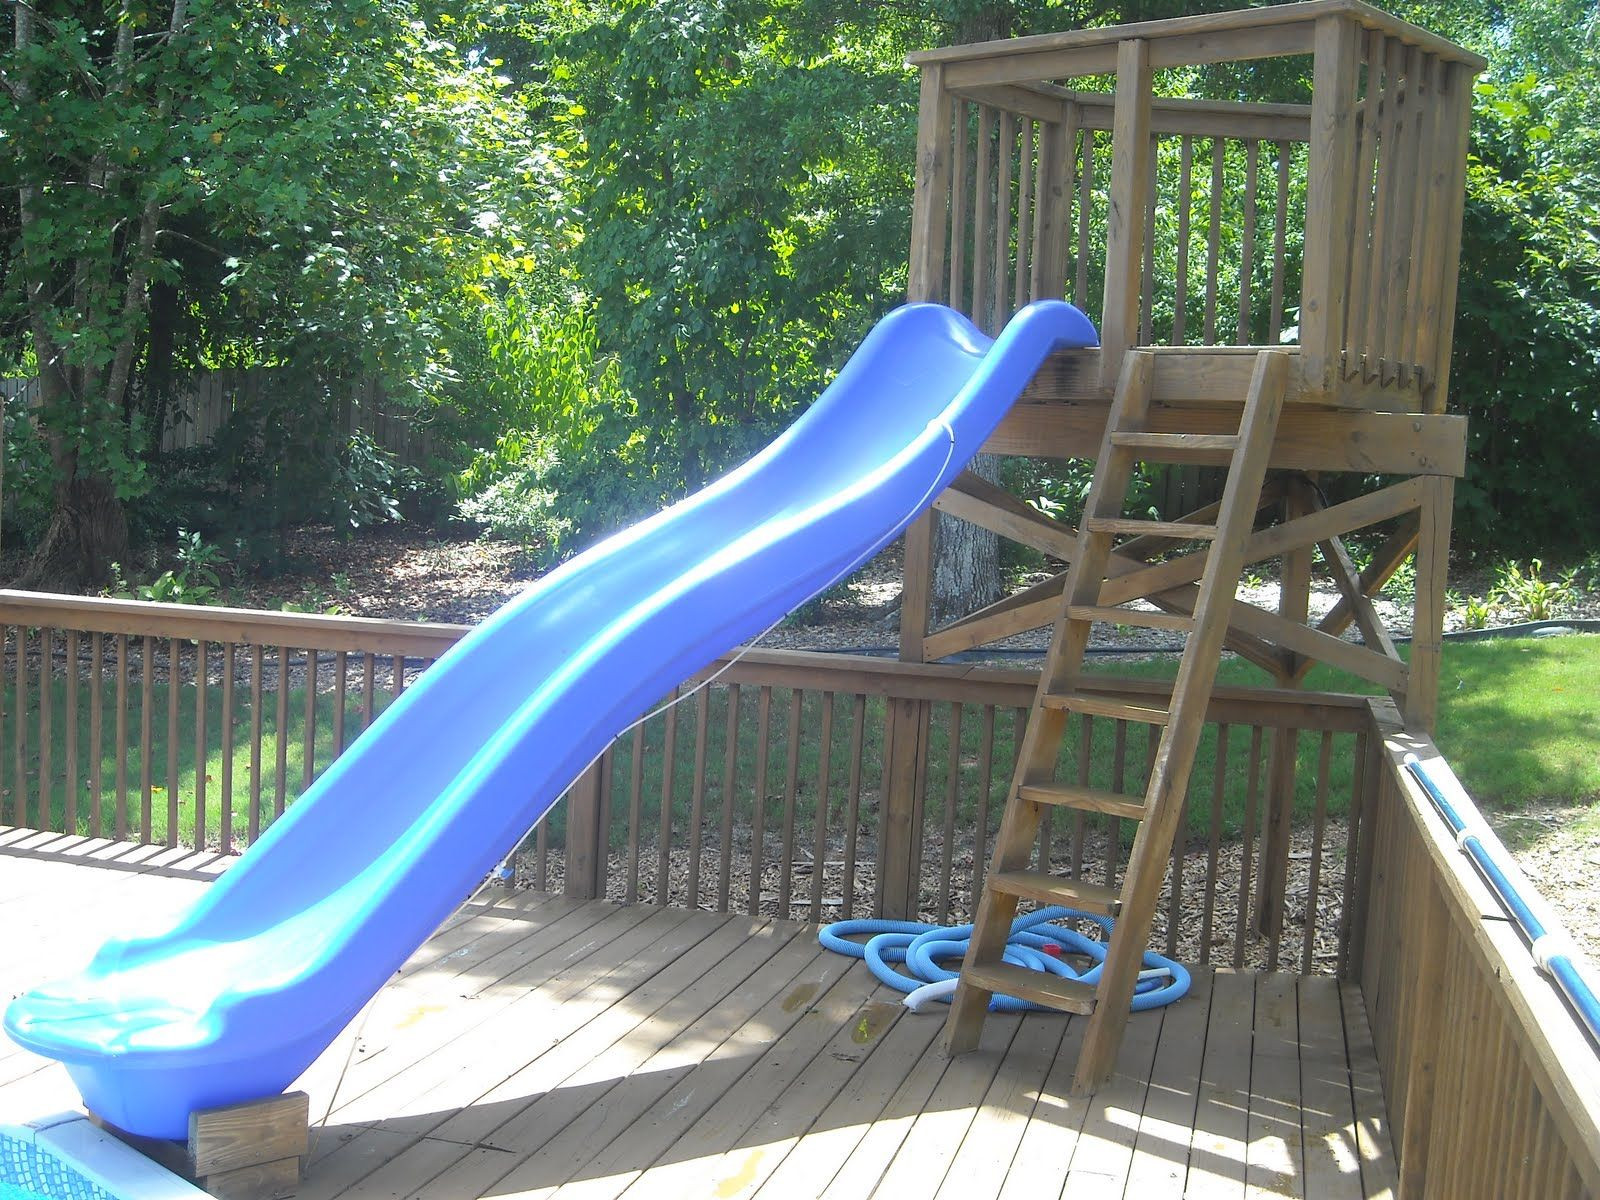 Best ideas about DIY Backyard Slide
. Save or Pin diy pool slide Now.